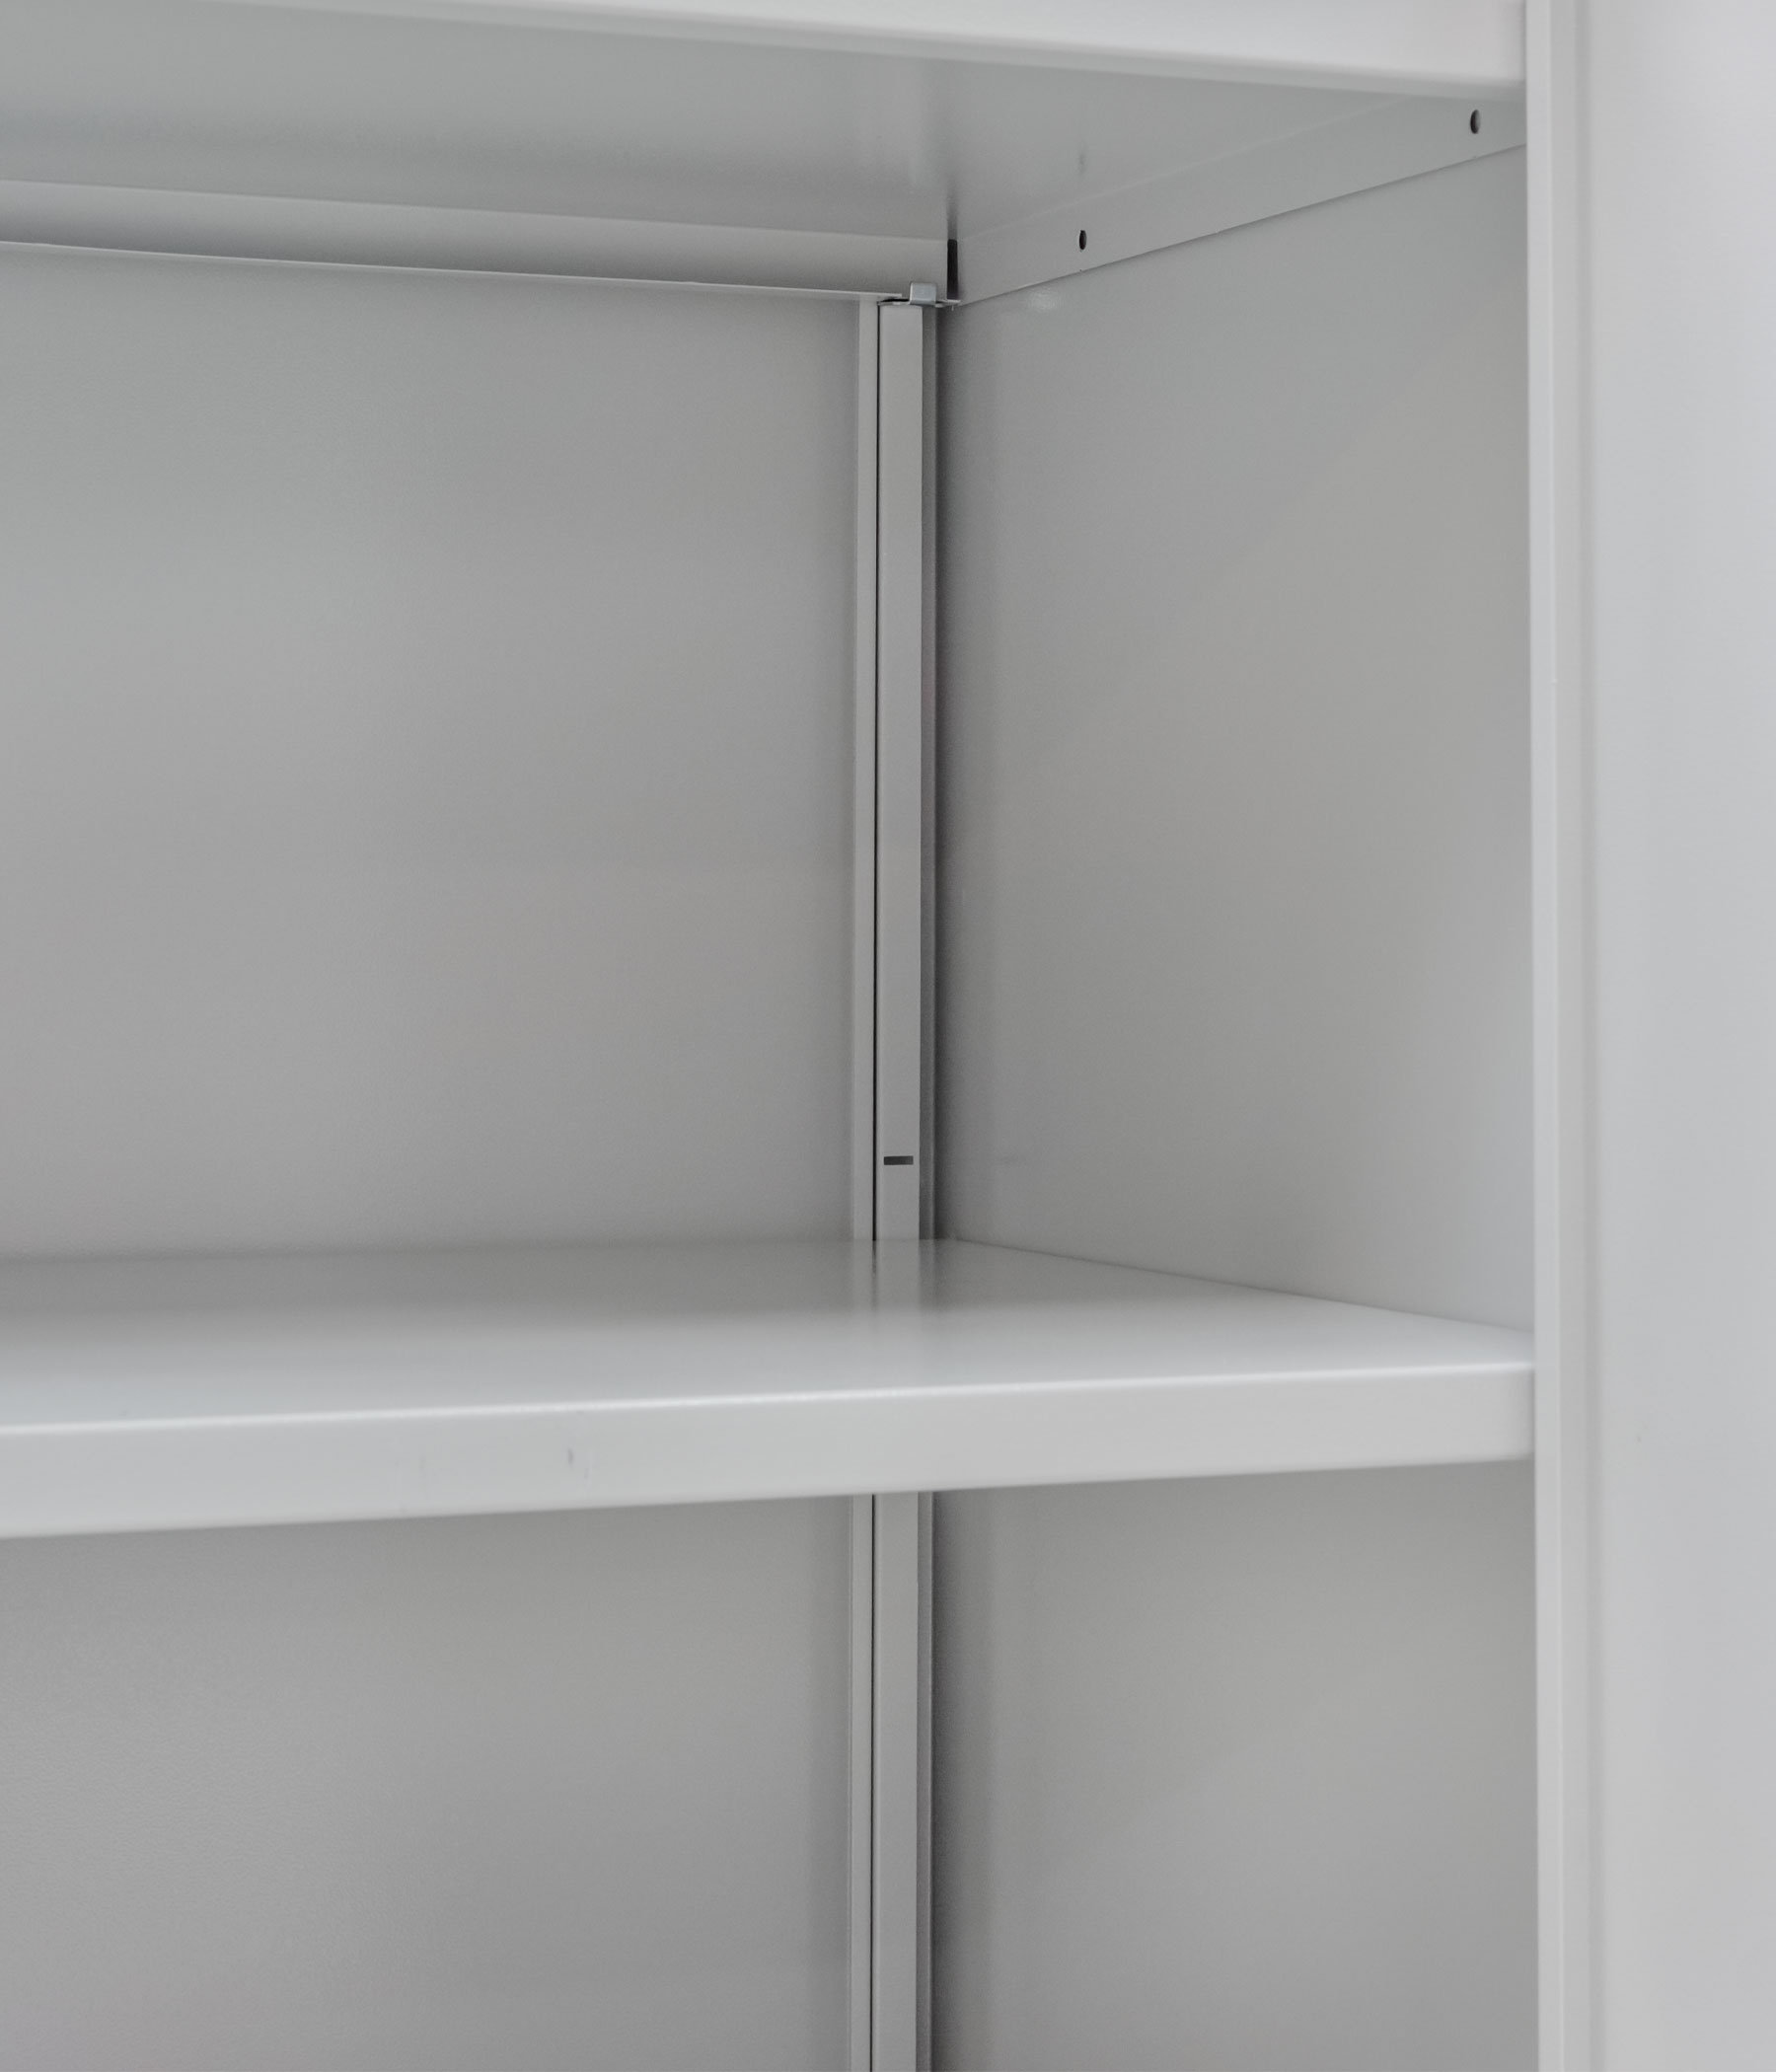 Metal shelves of an office cabinet